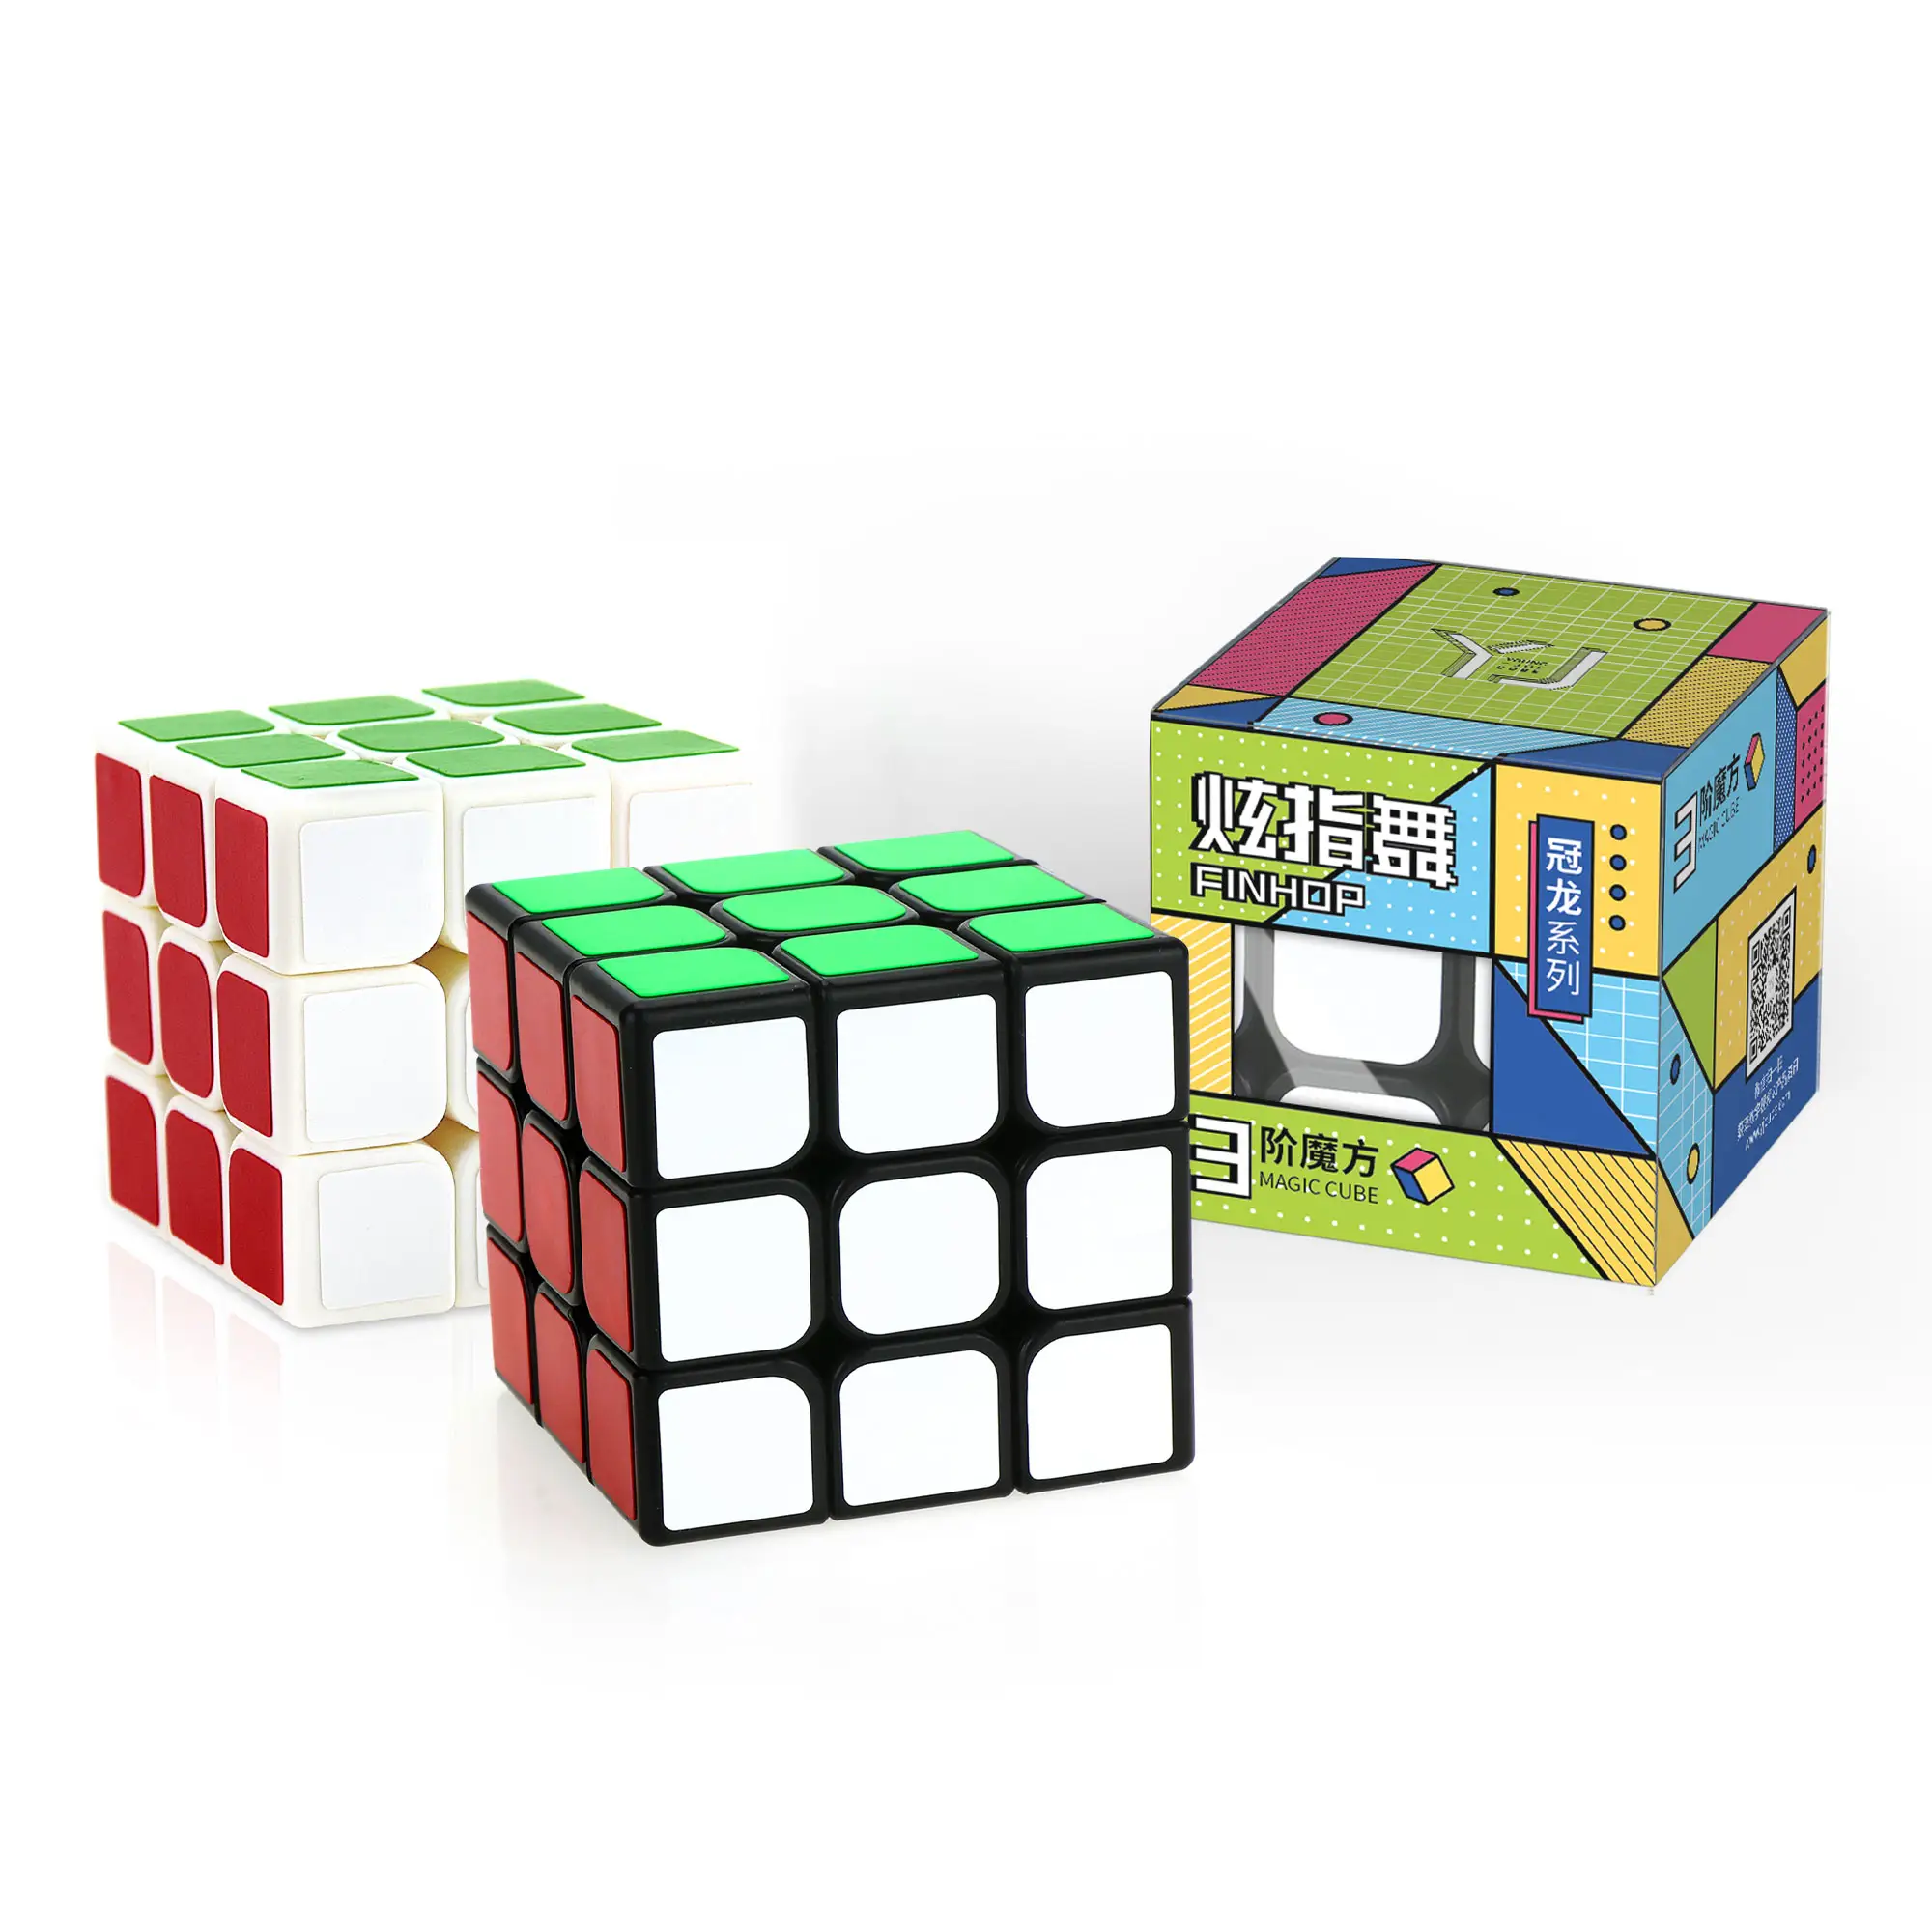 YJ Yongjun - Guanlong V3 magico 3x3x3 vendita calda promozione Puzzle educativo Fidget cubi 3x3